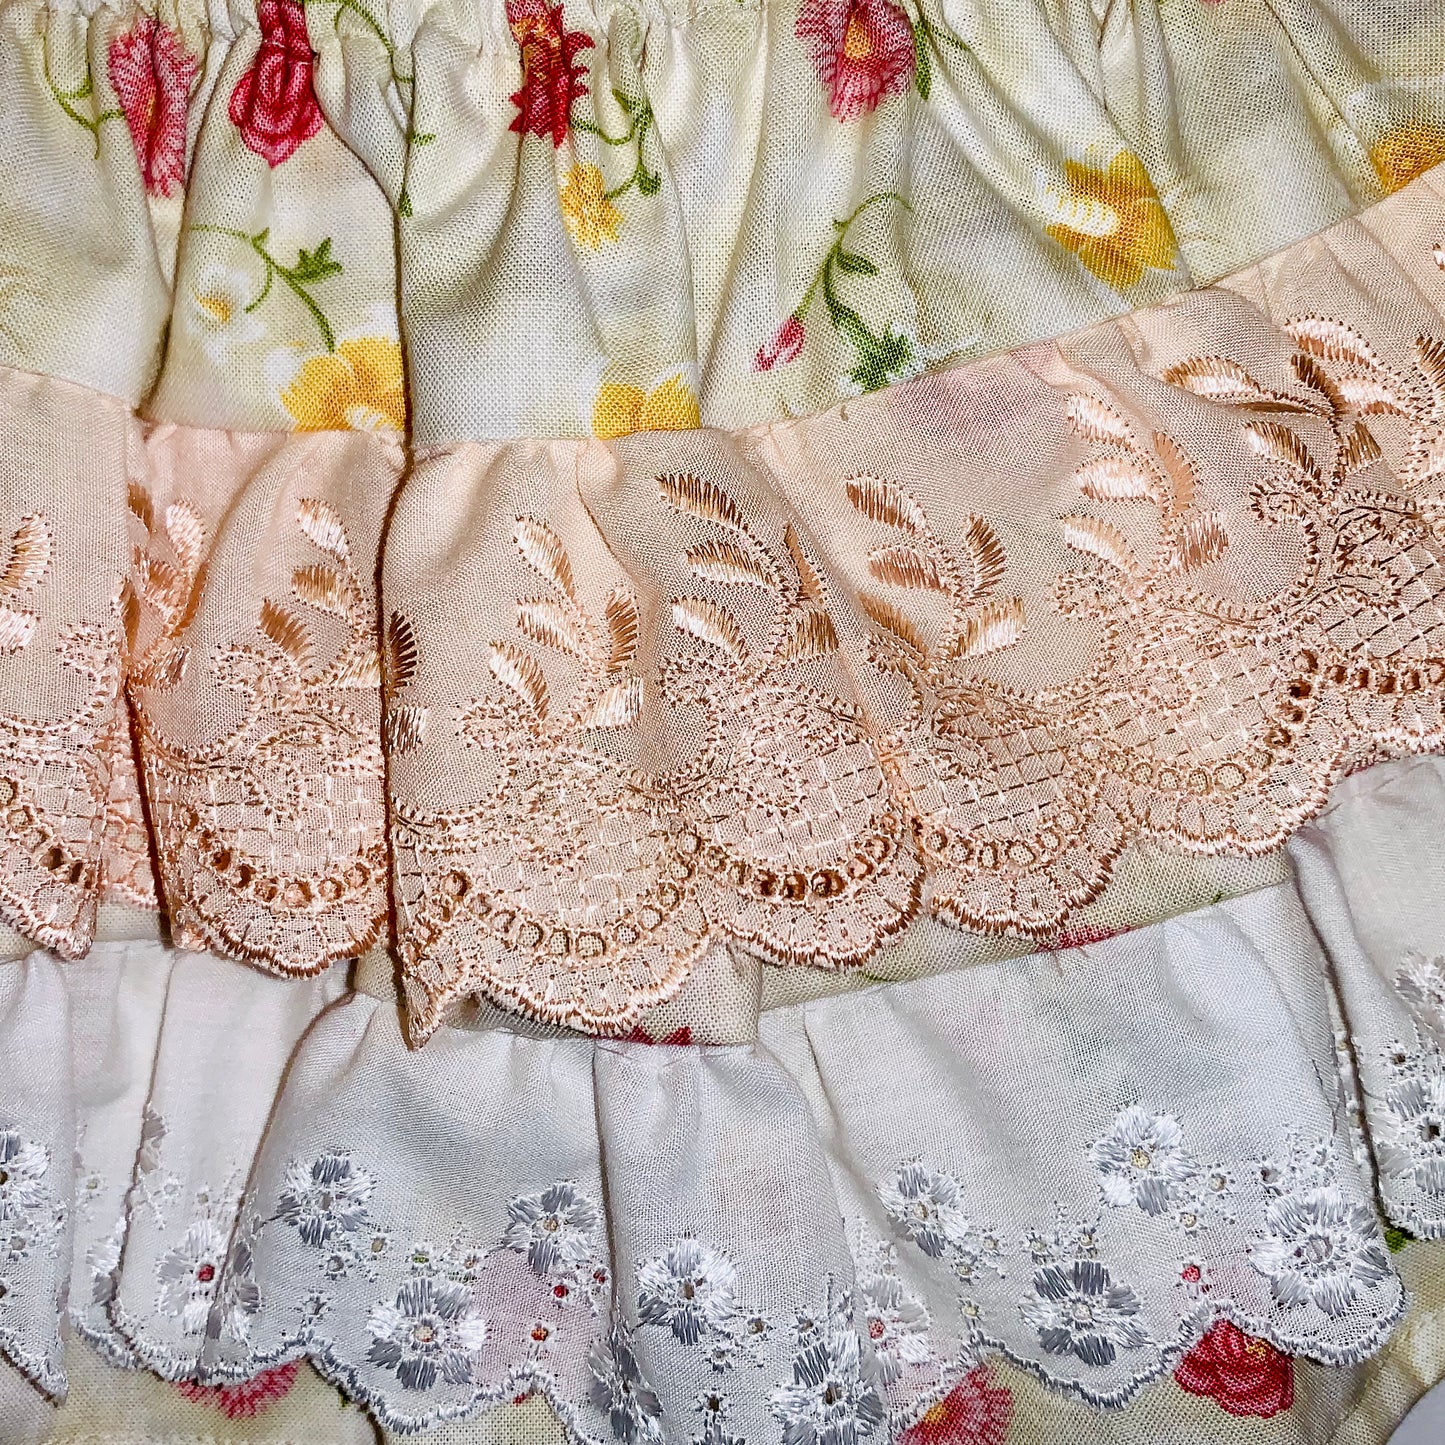 2 Piece Set - Skirt & Slip Ons - Pink Roses on Cream